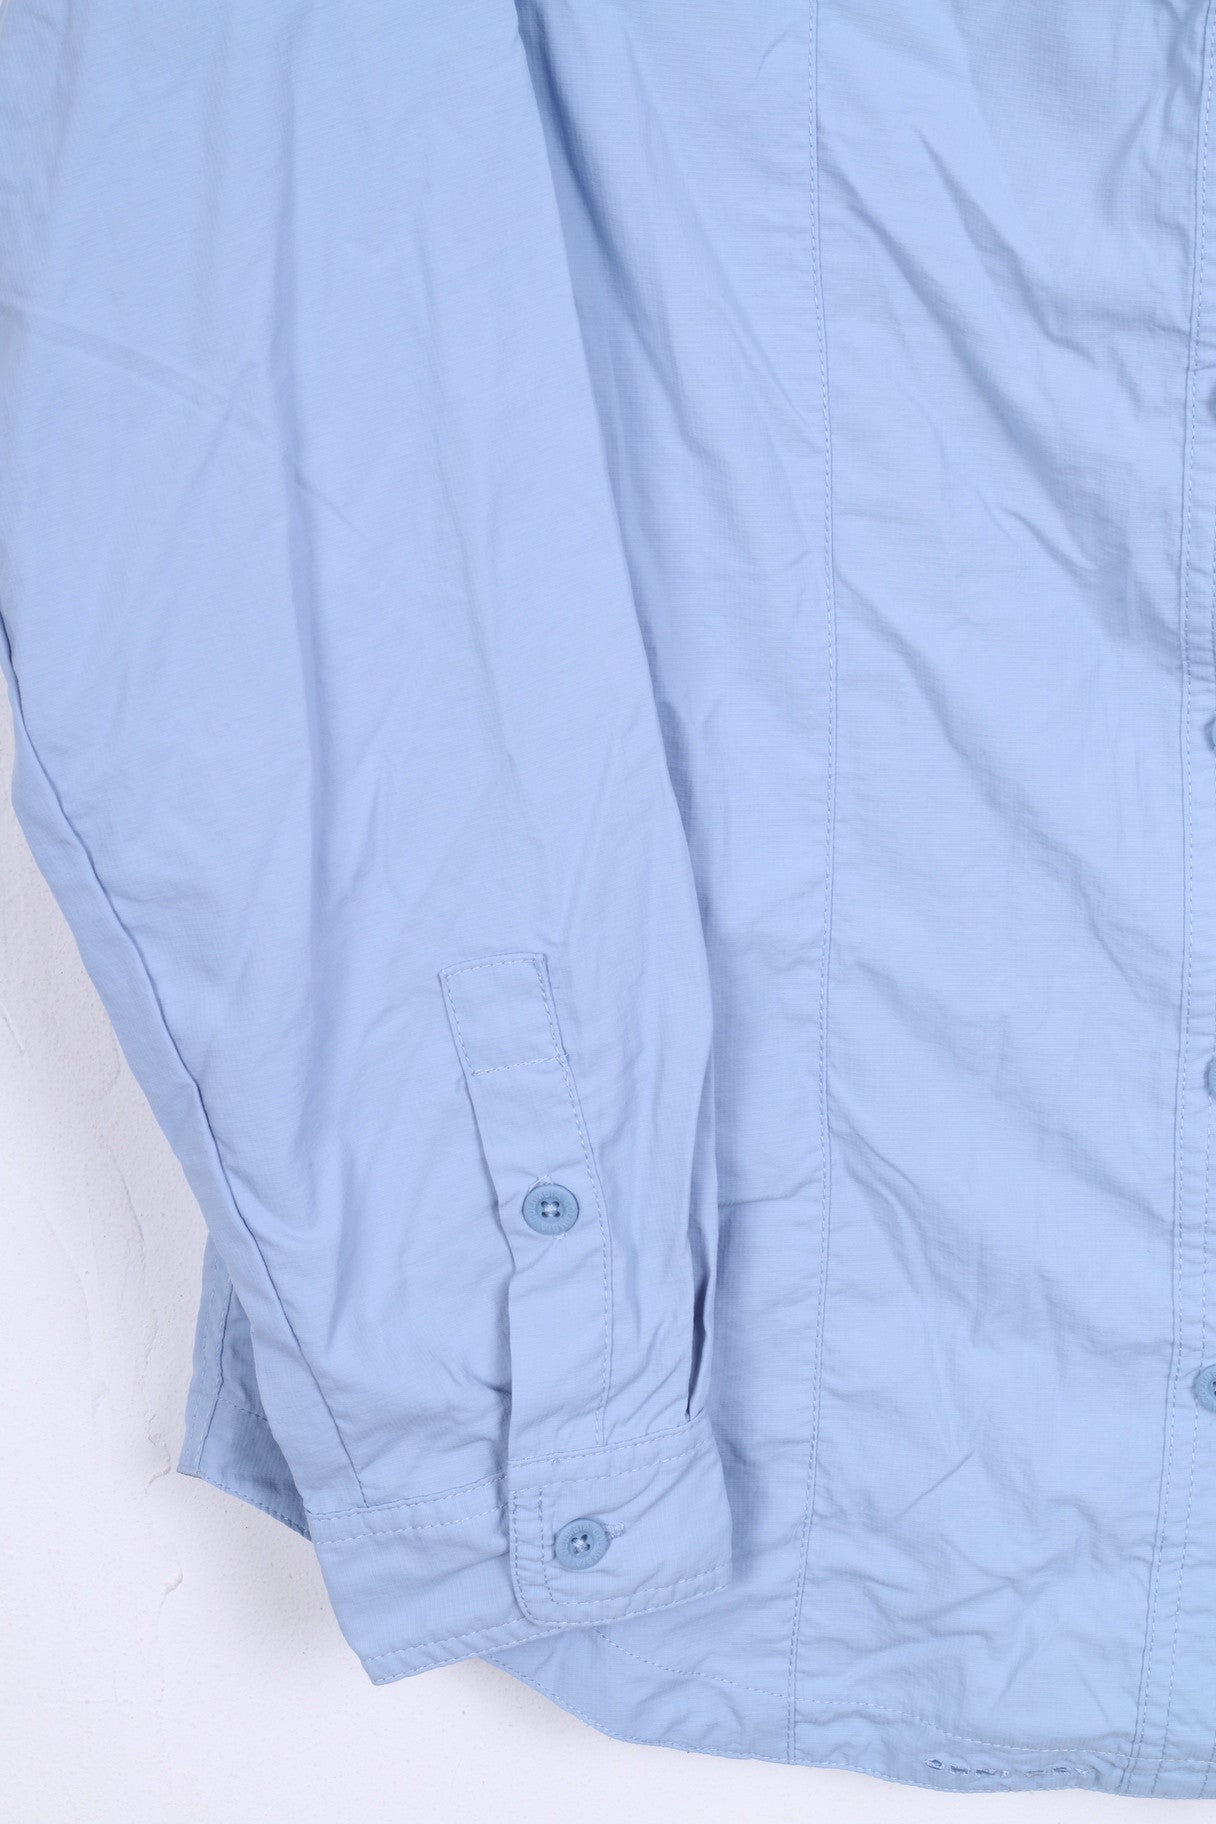 Columbia Womens S Casual Shirt Blue Nylon Top Sportswear Company